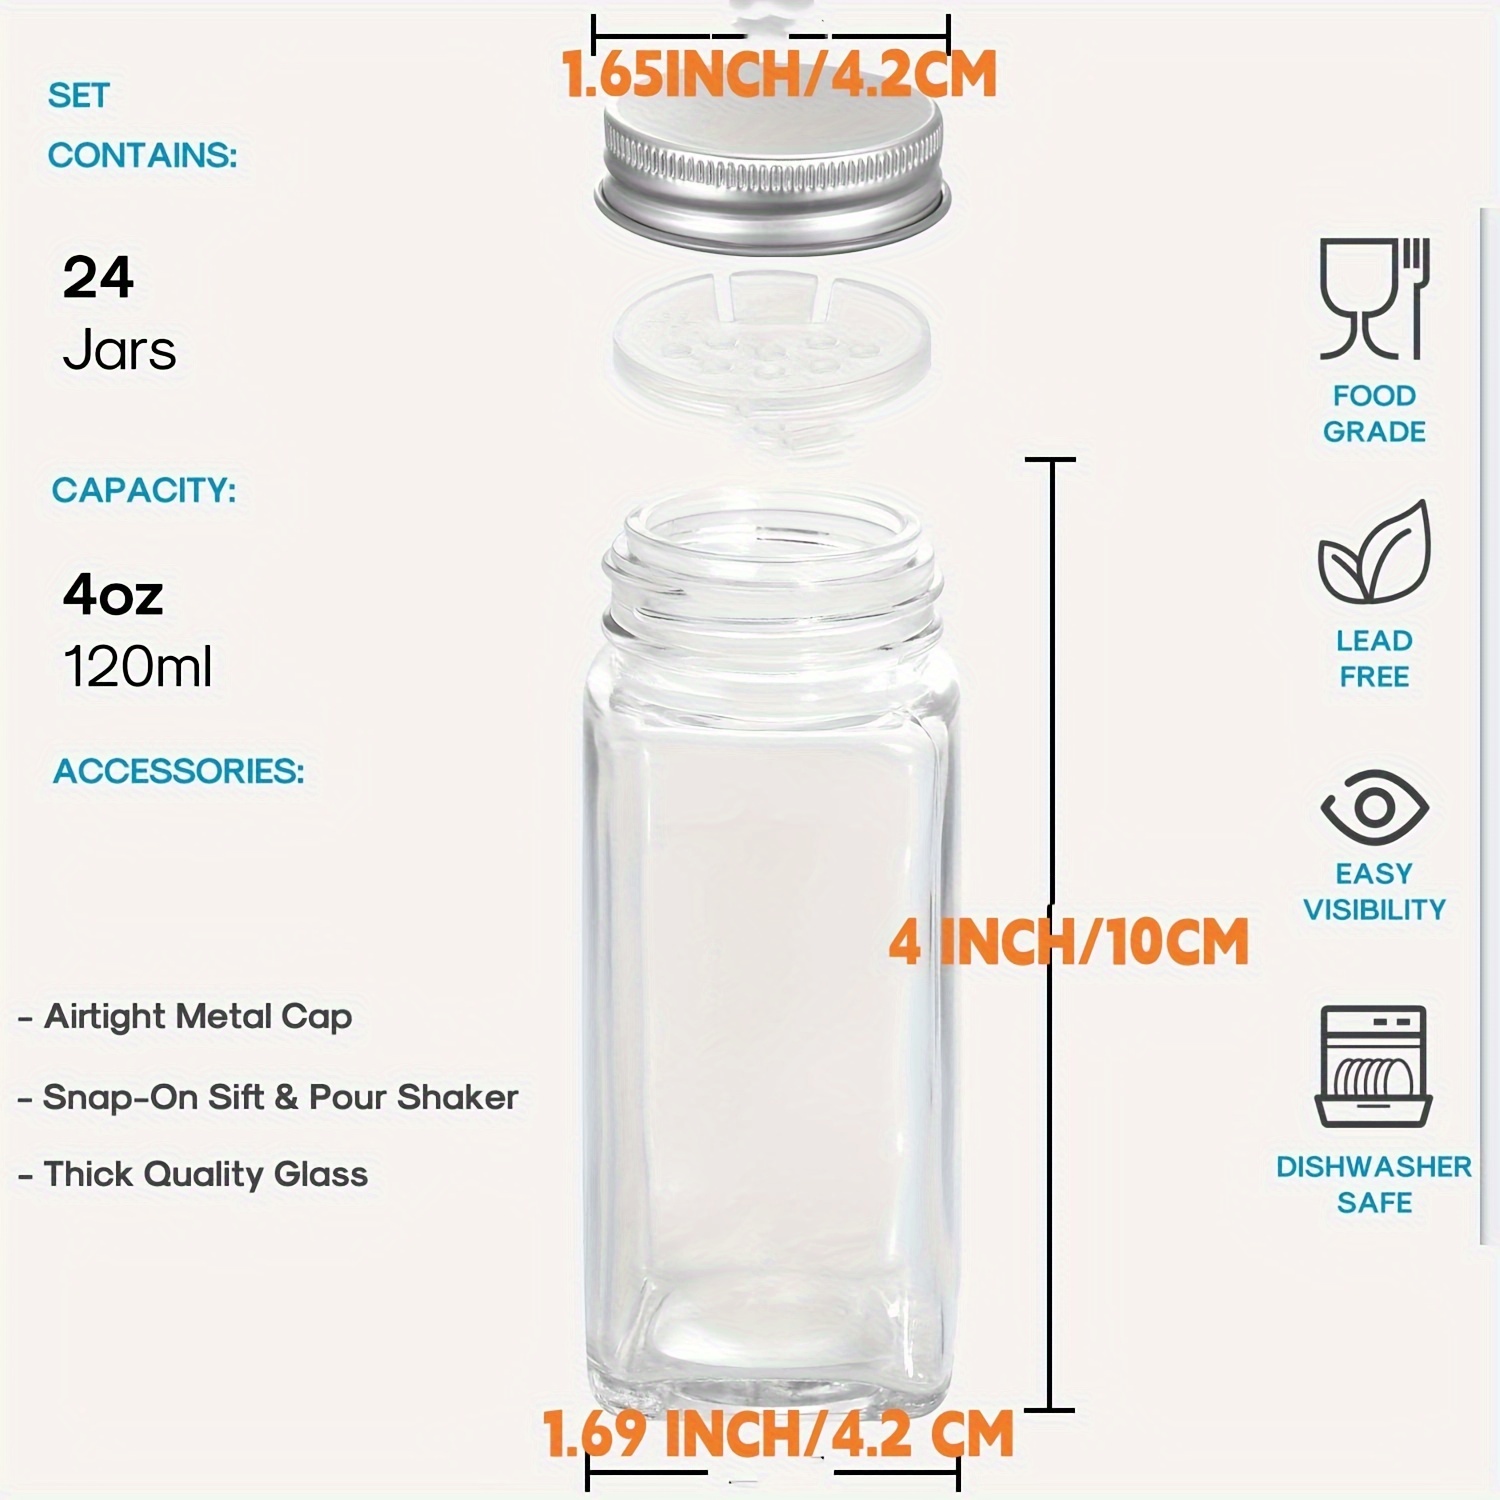 Aozita 24 Pcs Glass Spice Jars/Bottles - 4oz Empty Square Spice